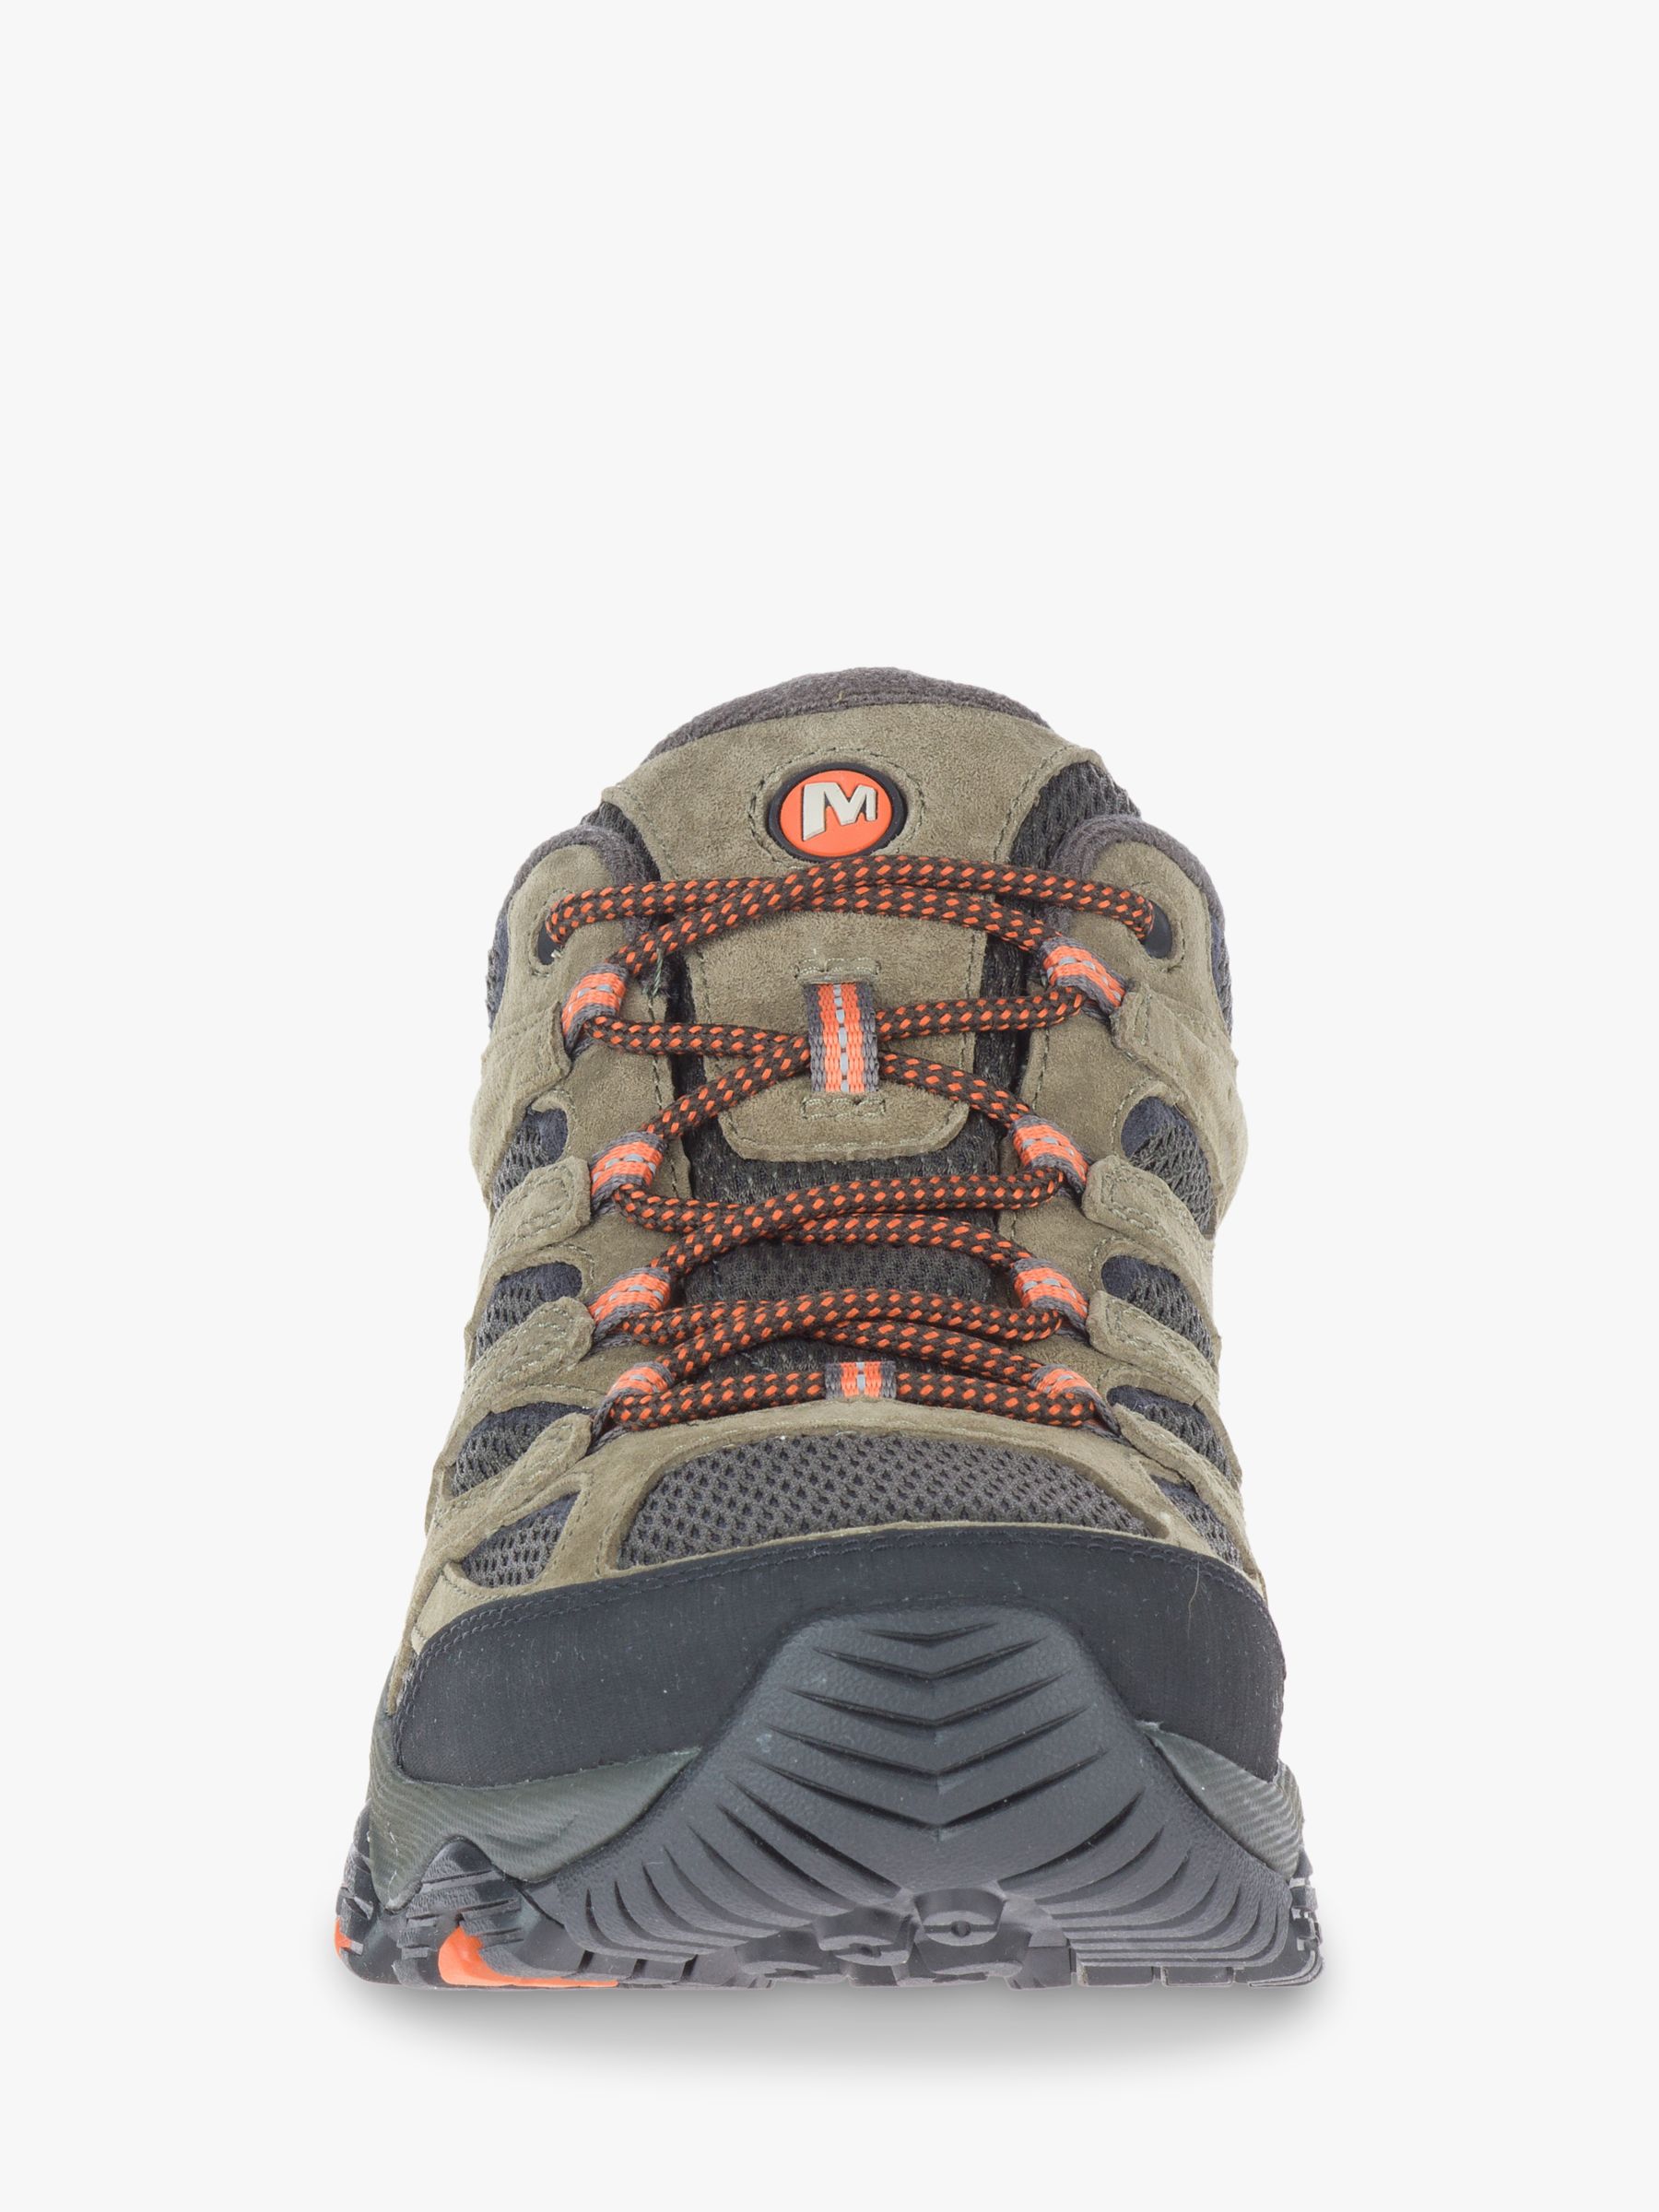 Merrell Moab 3 Men's Gore-Tex Waterproof Hiking Shoes, Olive, 7